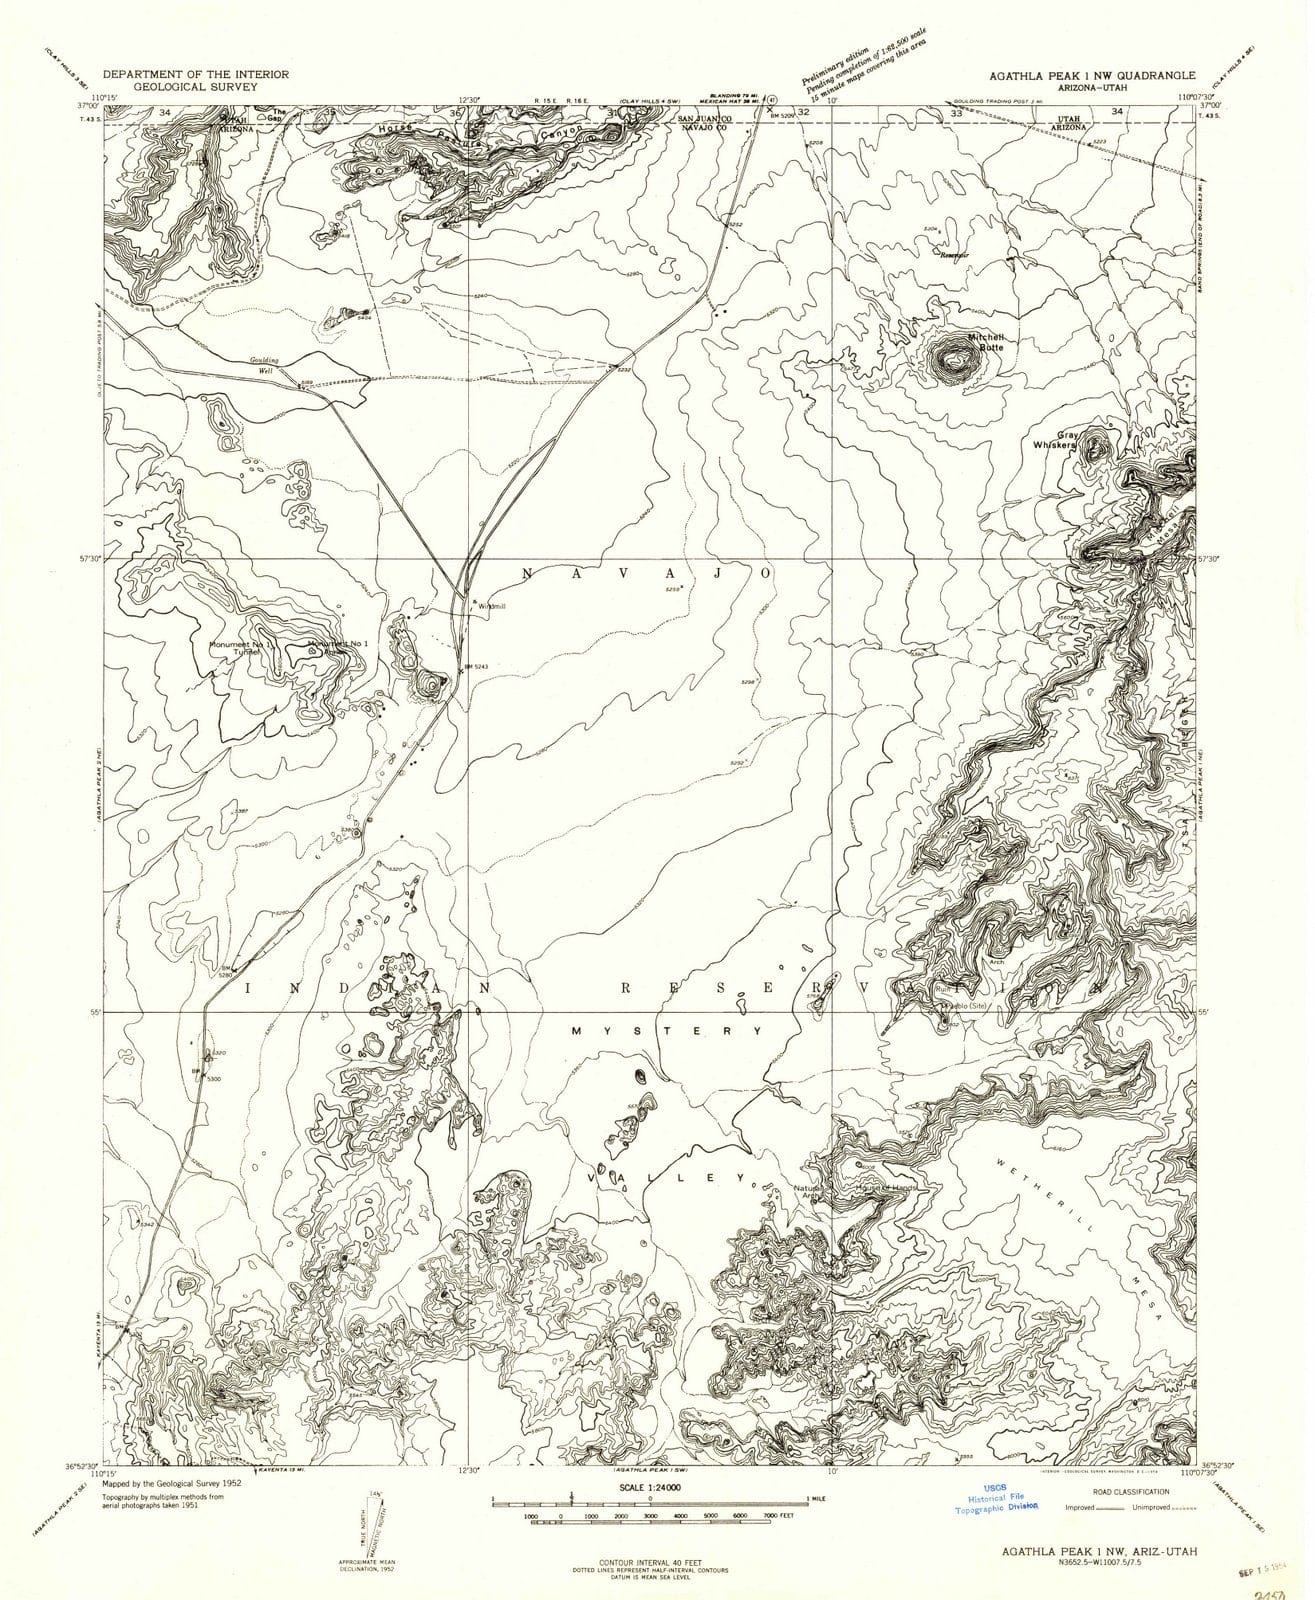 1952 Agathla Peak 1, AZ - Arizona - USGS Topographic Map v2